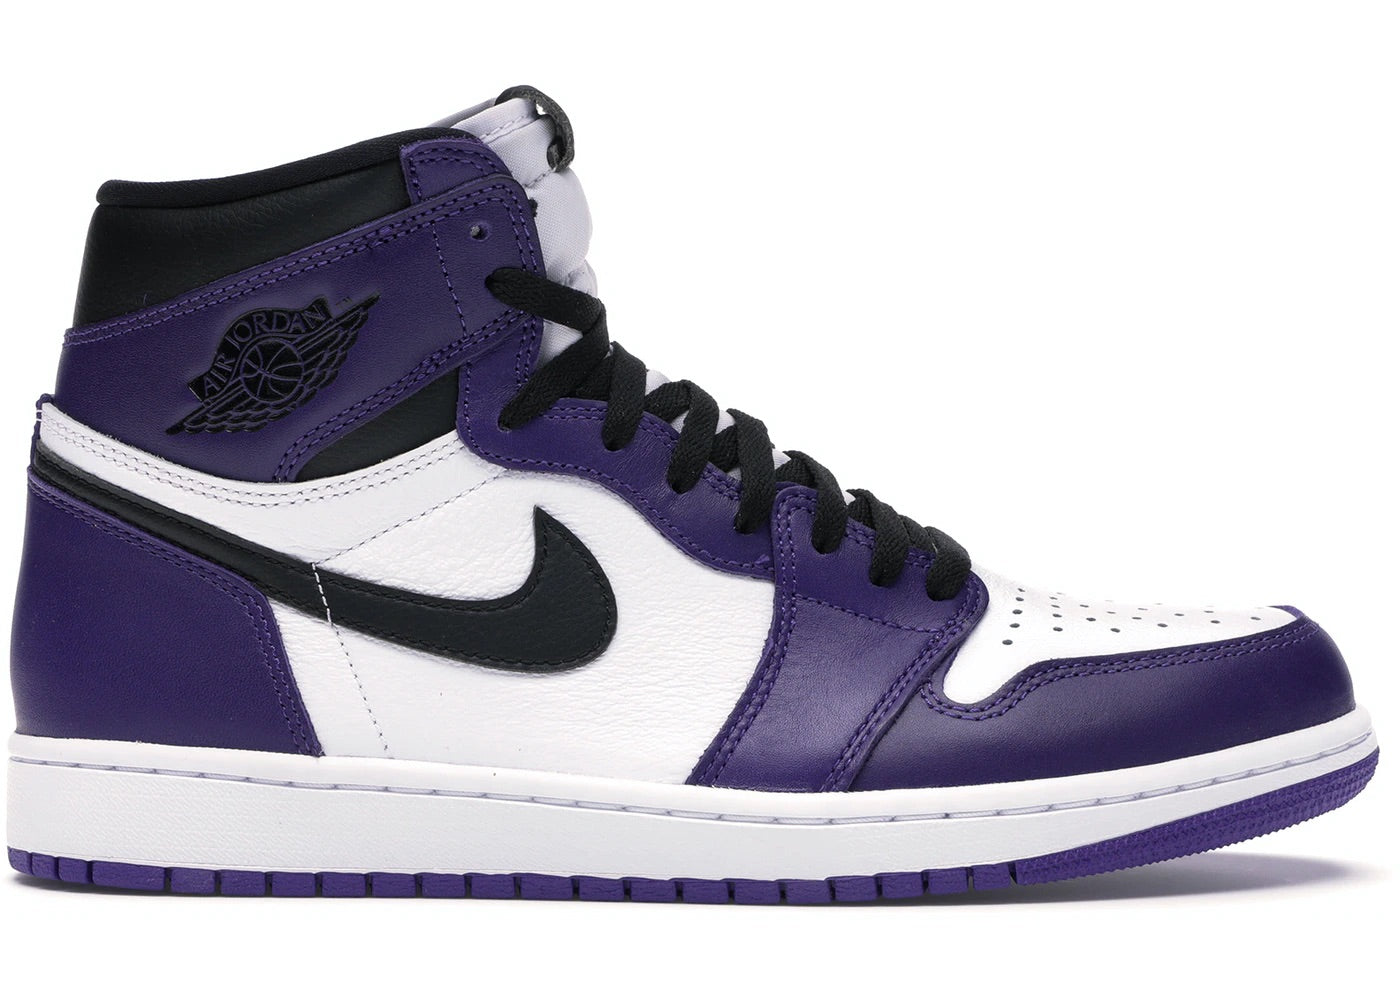 Jordan 1 High "Court Purple"